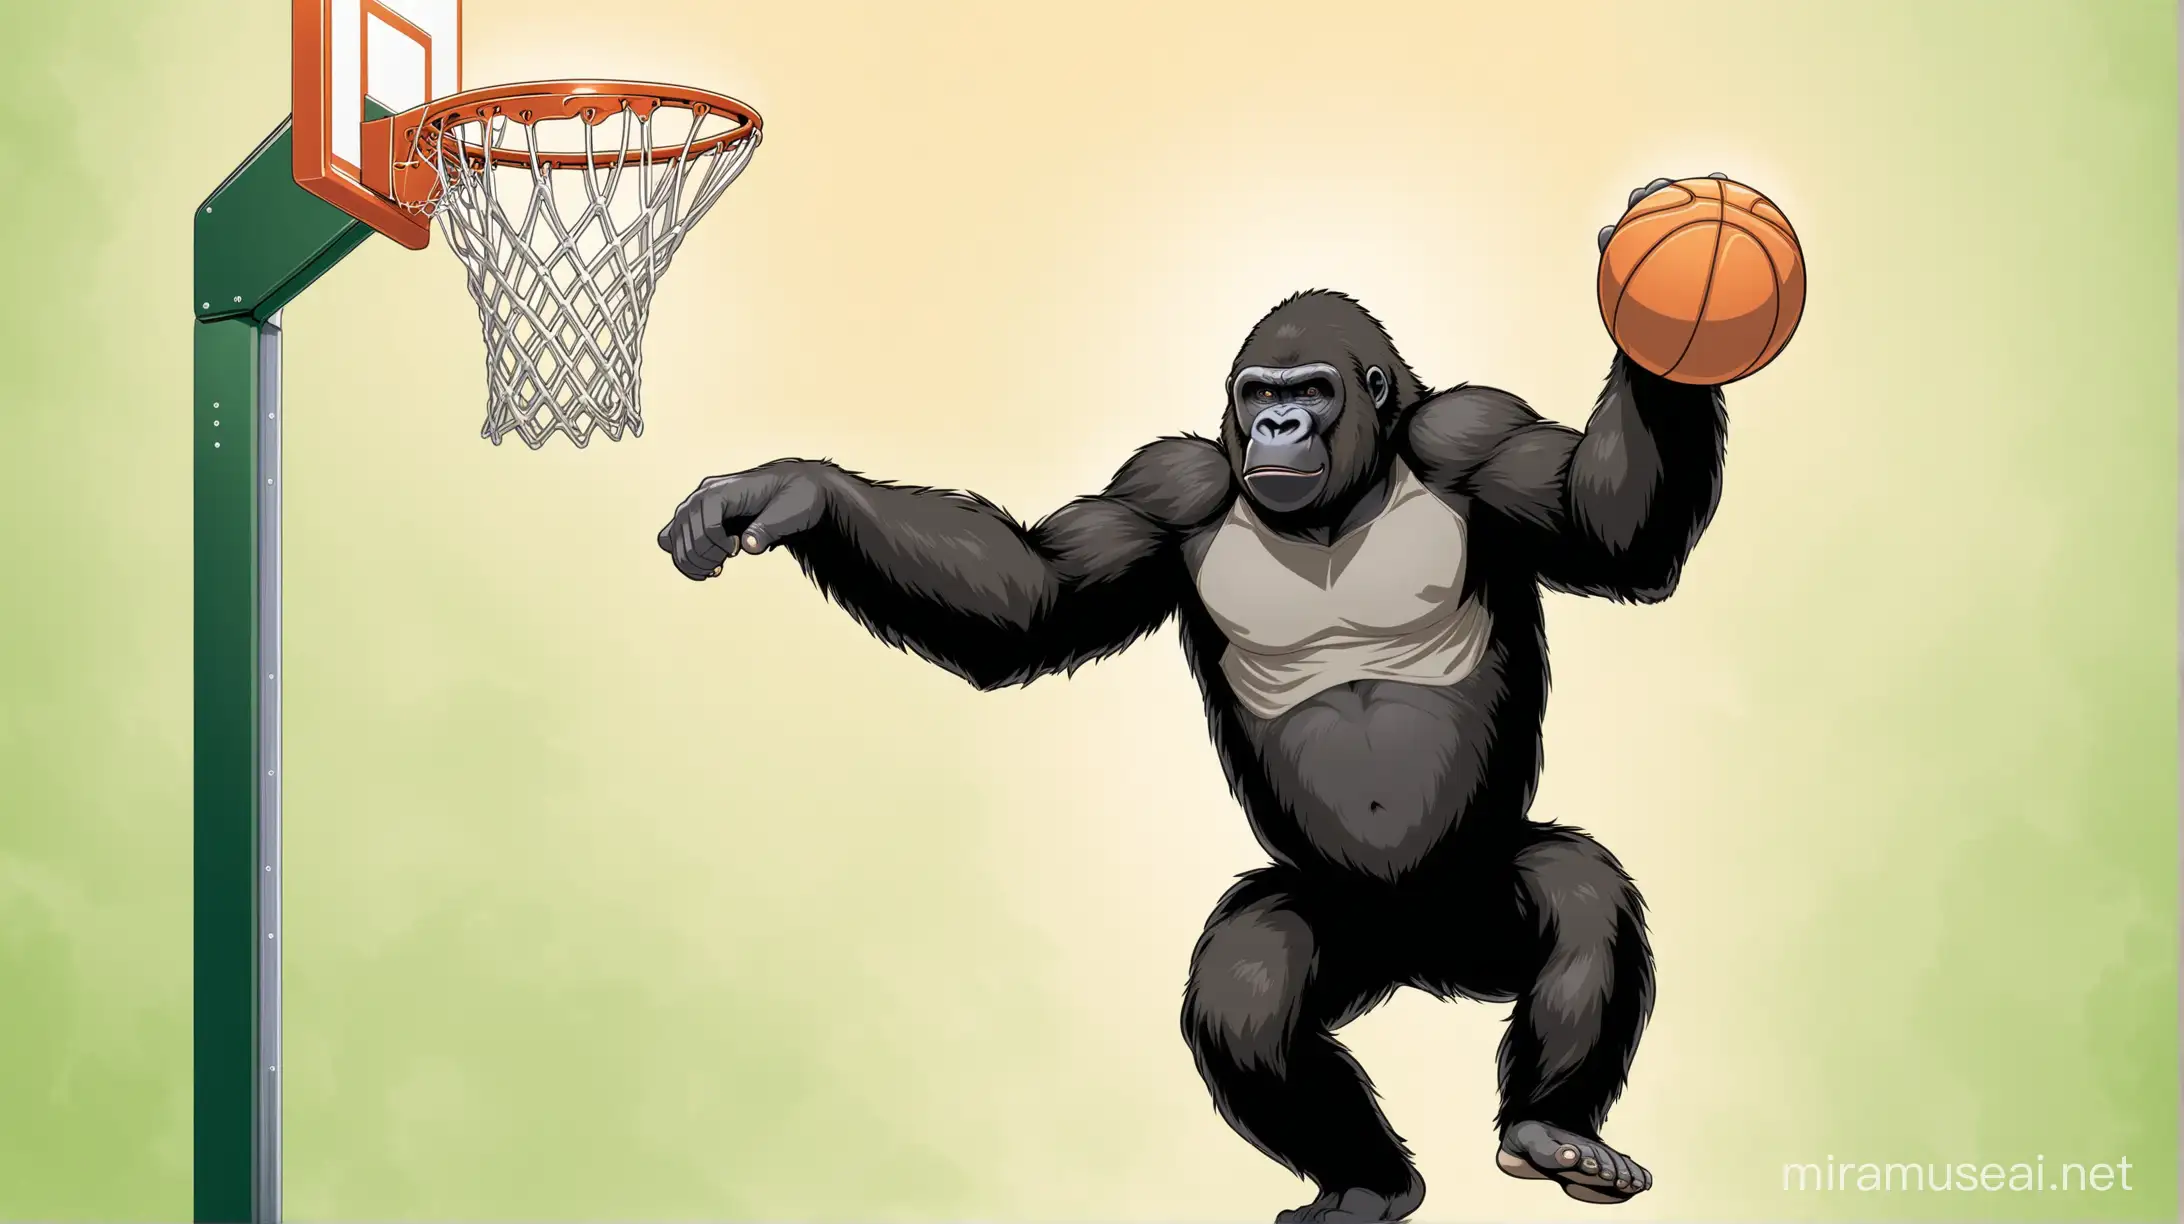 gorilla dunking a basketball hard over a chimpanzee